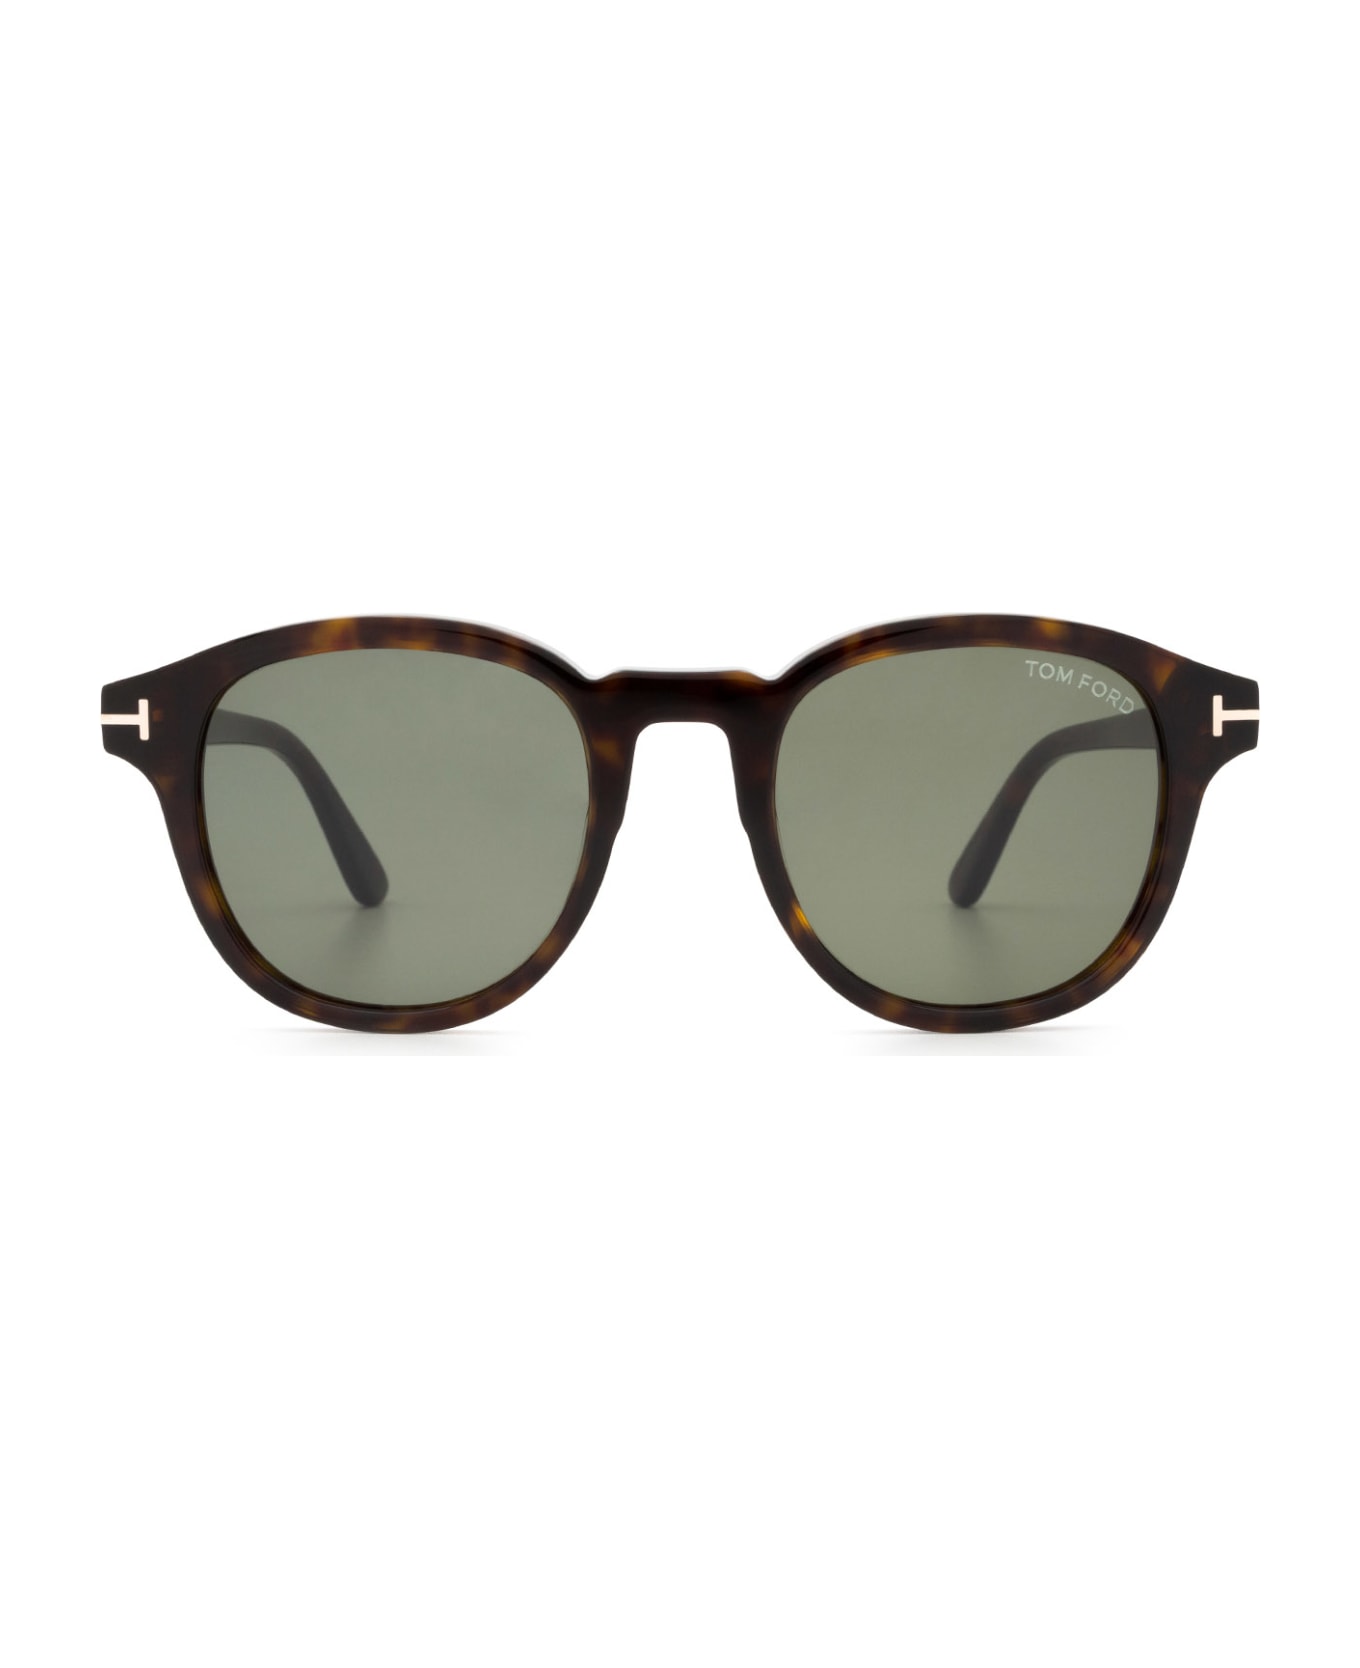 Tom Ford Eyewear Ft0752 Dark Havana Sunglasses - Dark Havana